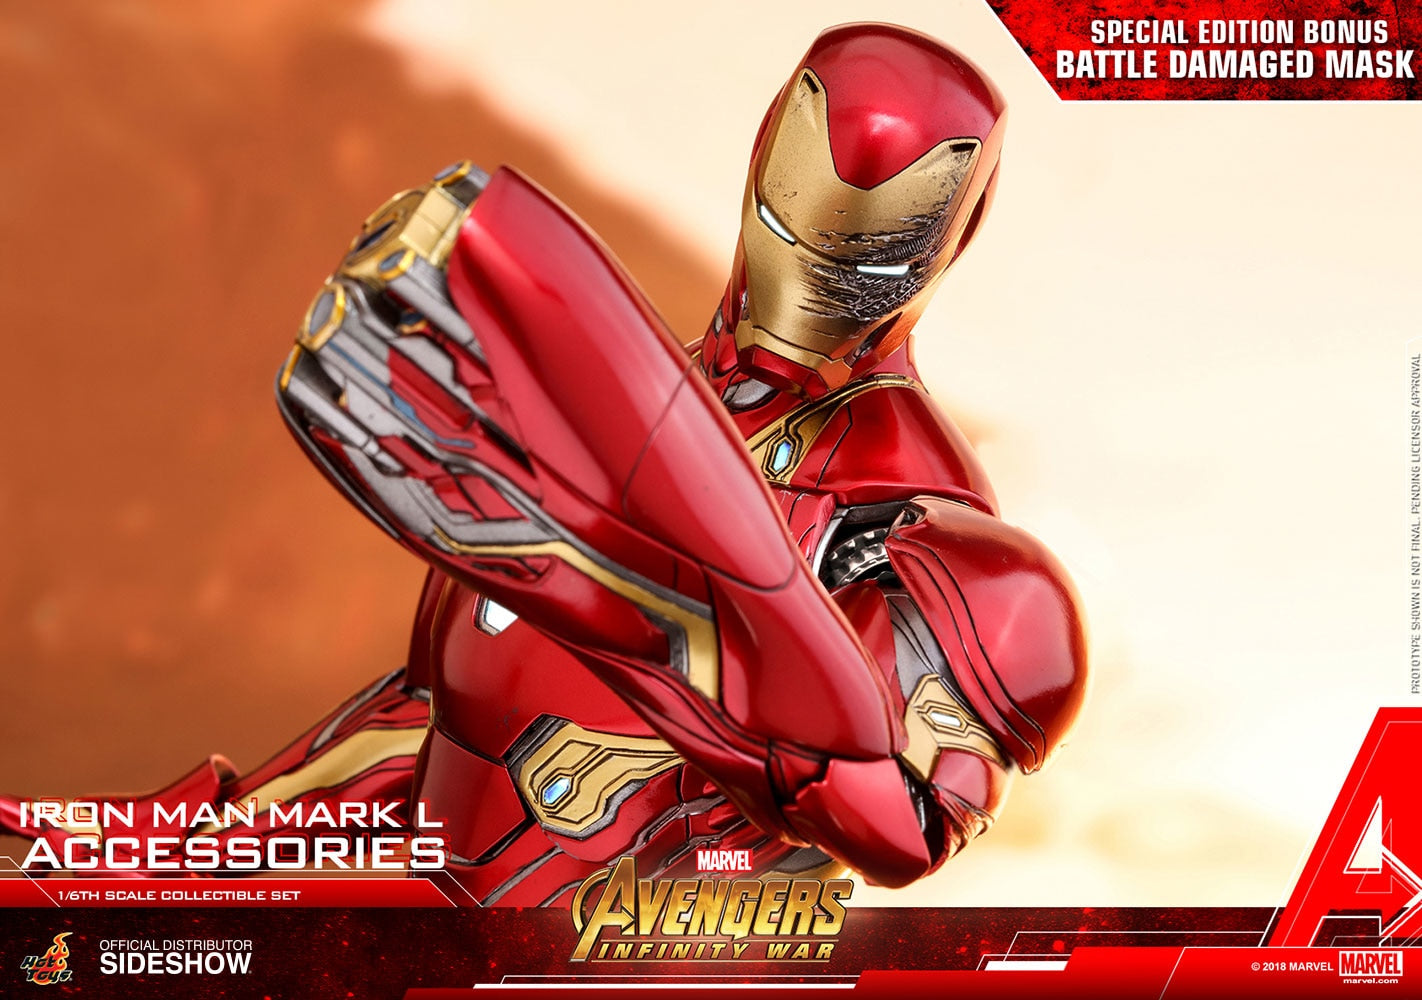 Iron Man Mark L Accesories S.E 1/6 - Avengers: Infinity War Hot Toys